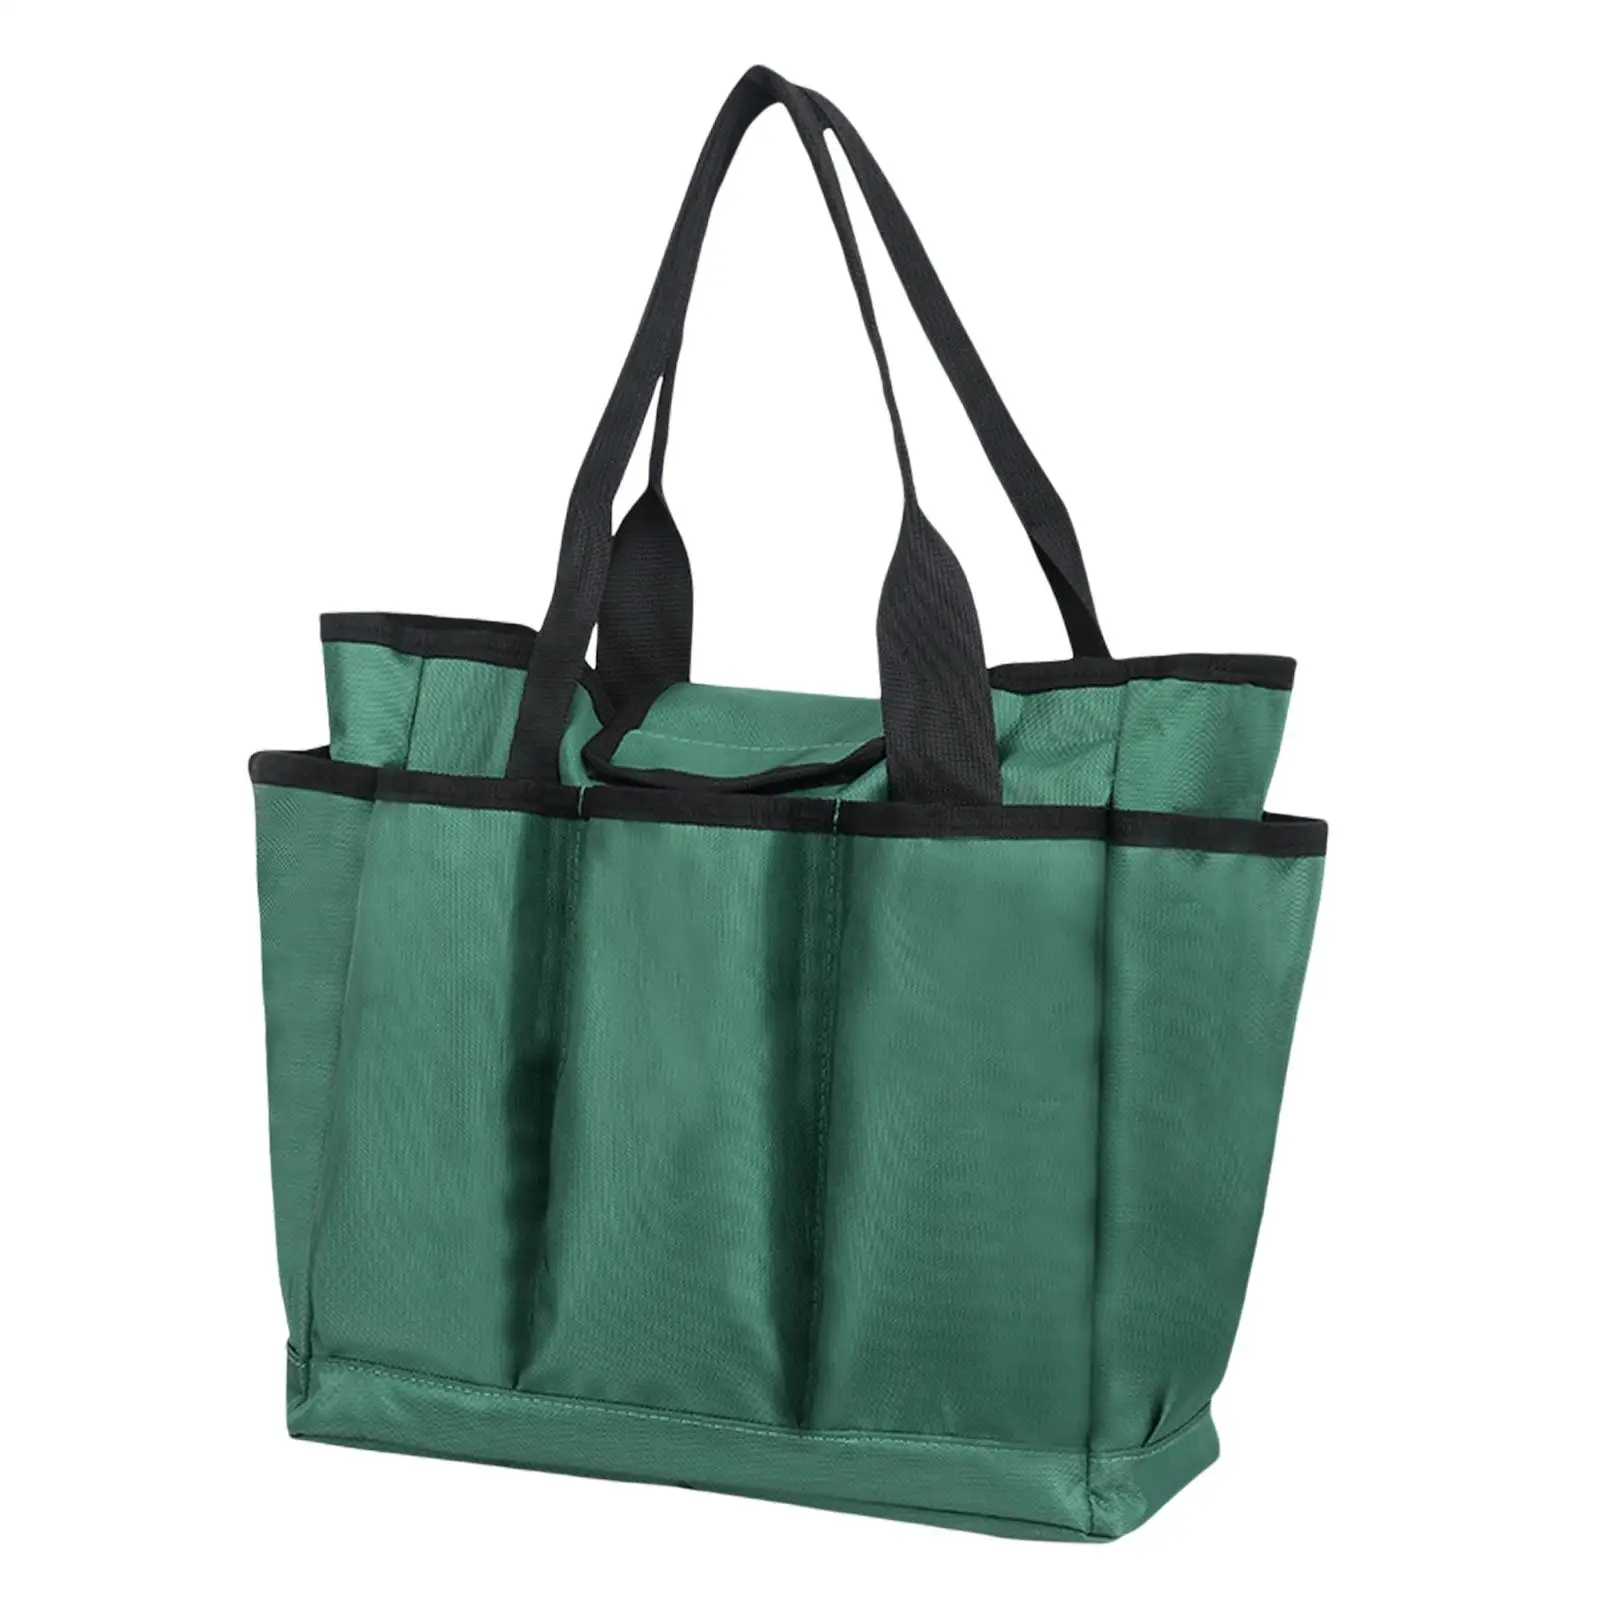 Gardening Tote Bag Portable Handle Multifunctional Handbag for Lawn Home